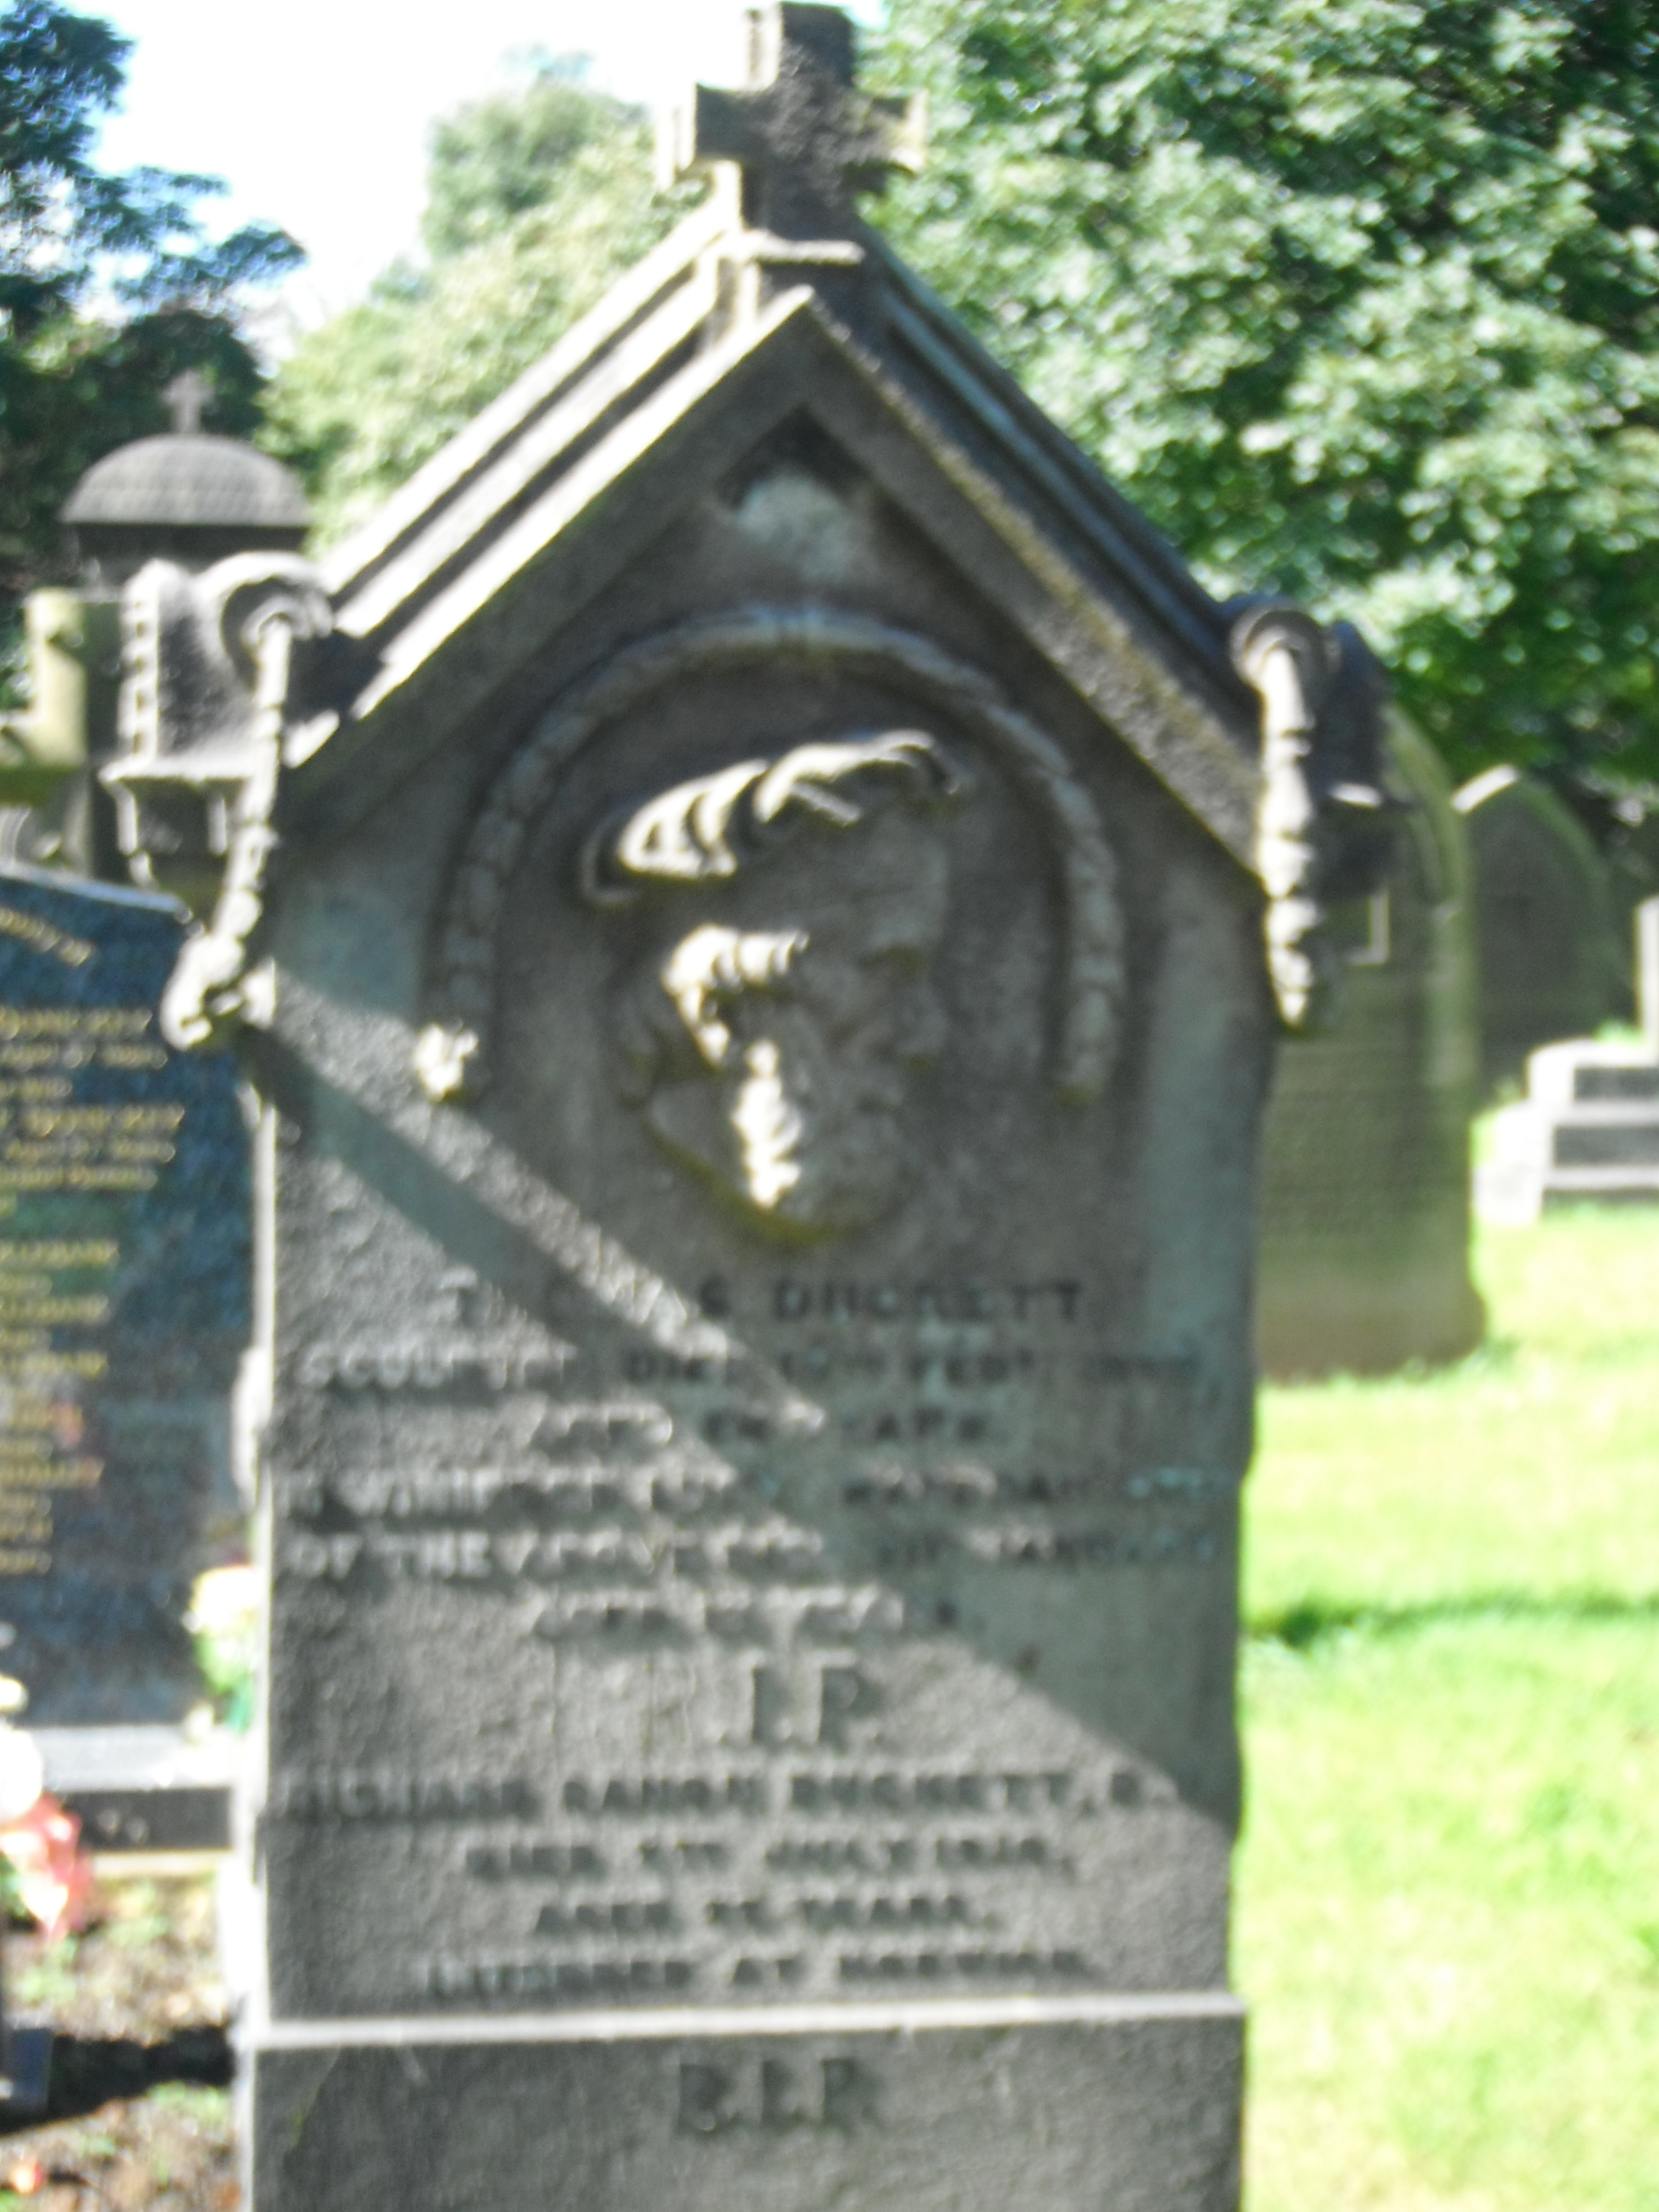 Photo taken by me - a grave in Preston Cemetery